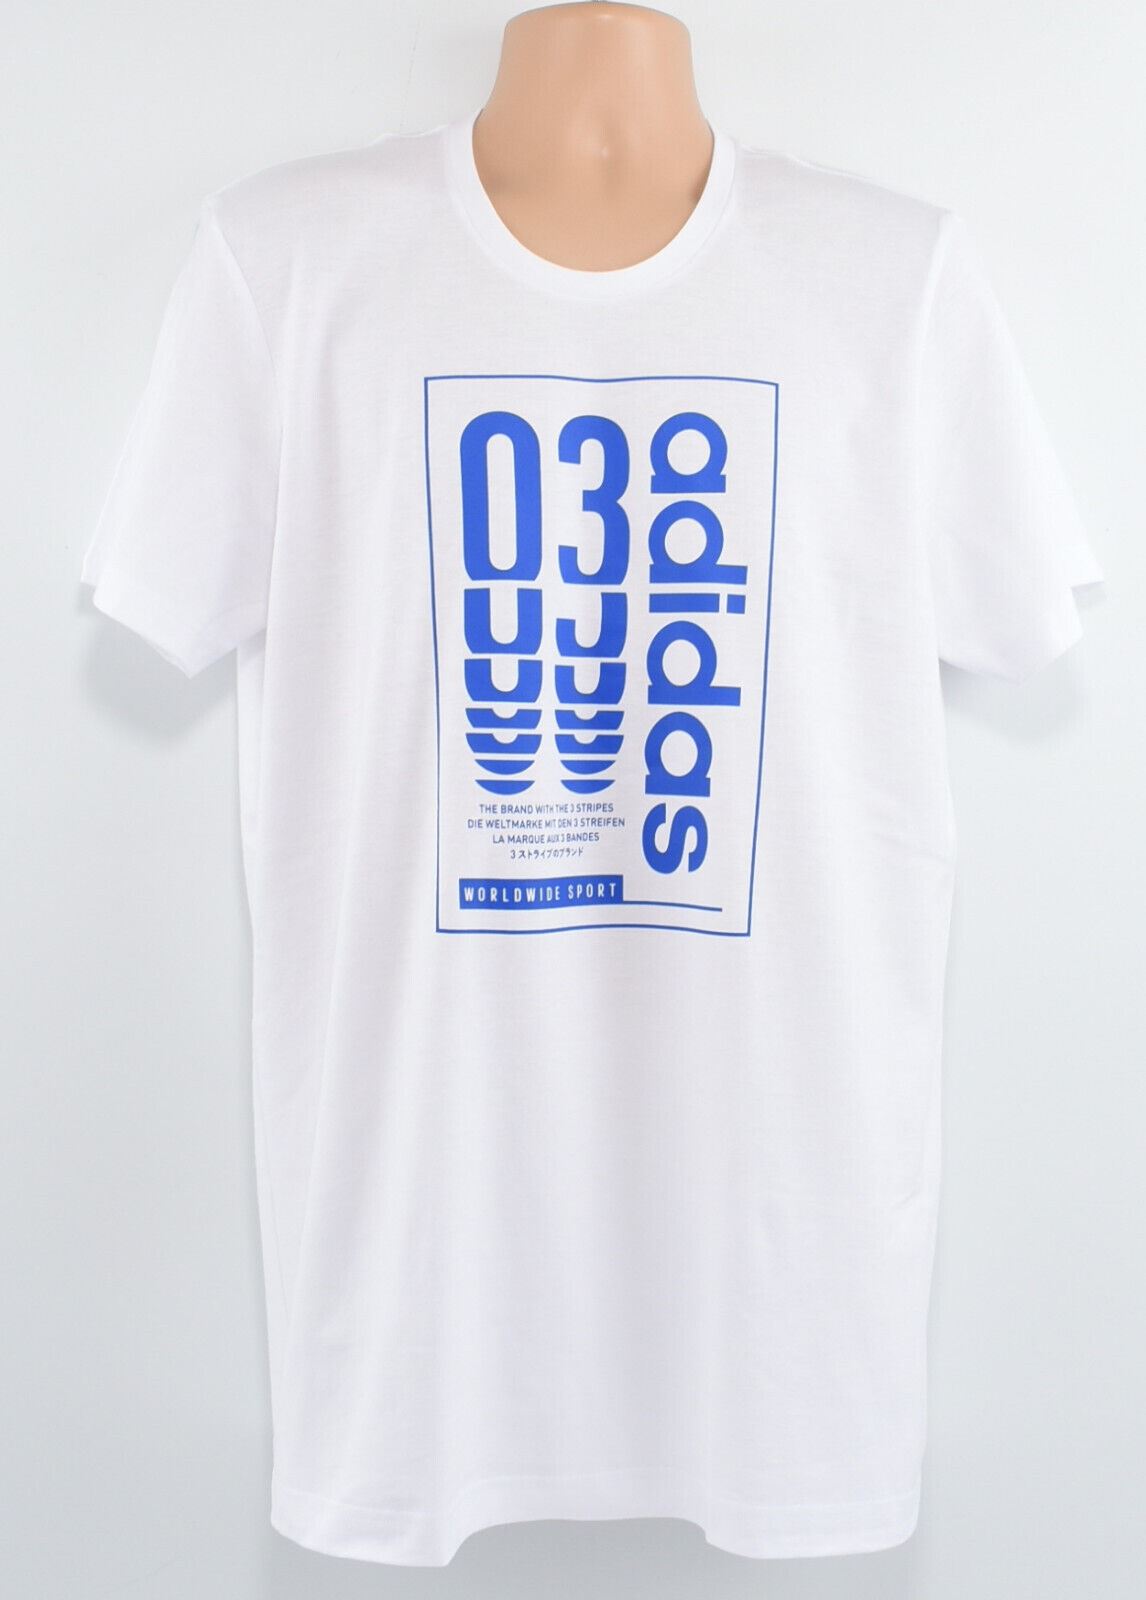 ADIDAS Men's Box Logo Crew Neck T-shirt, White/Blue, size MEDIUM